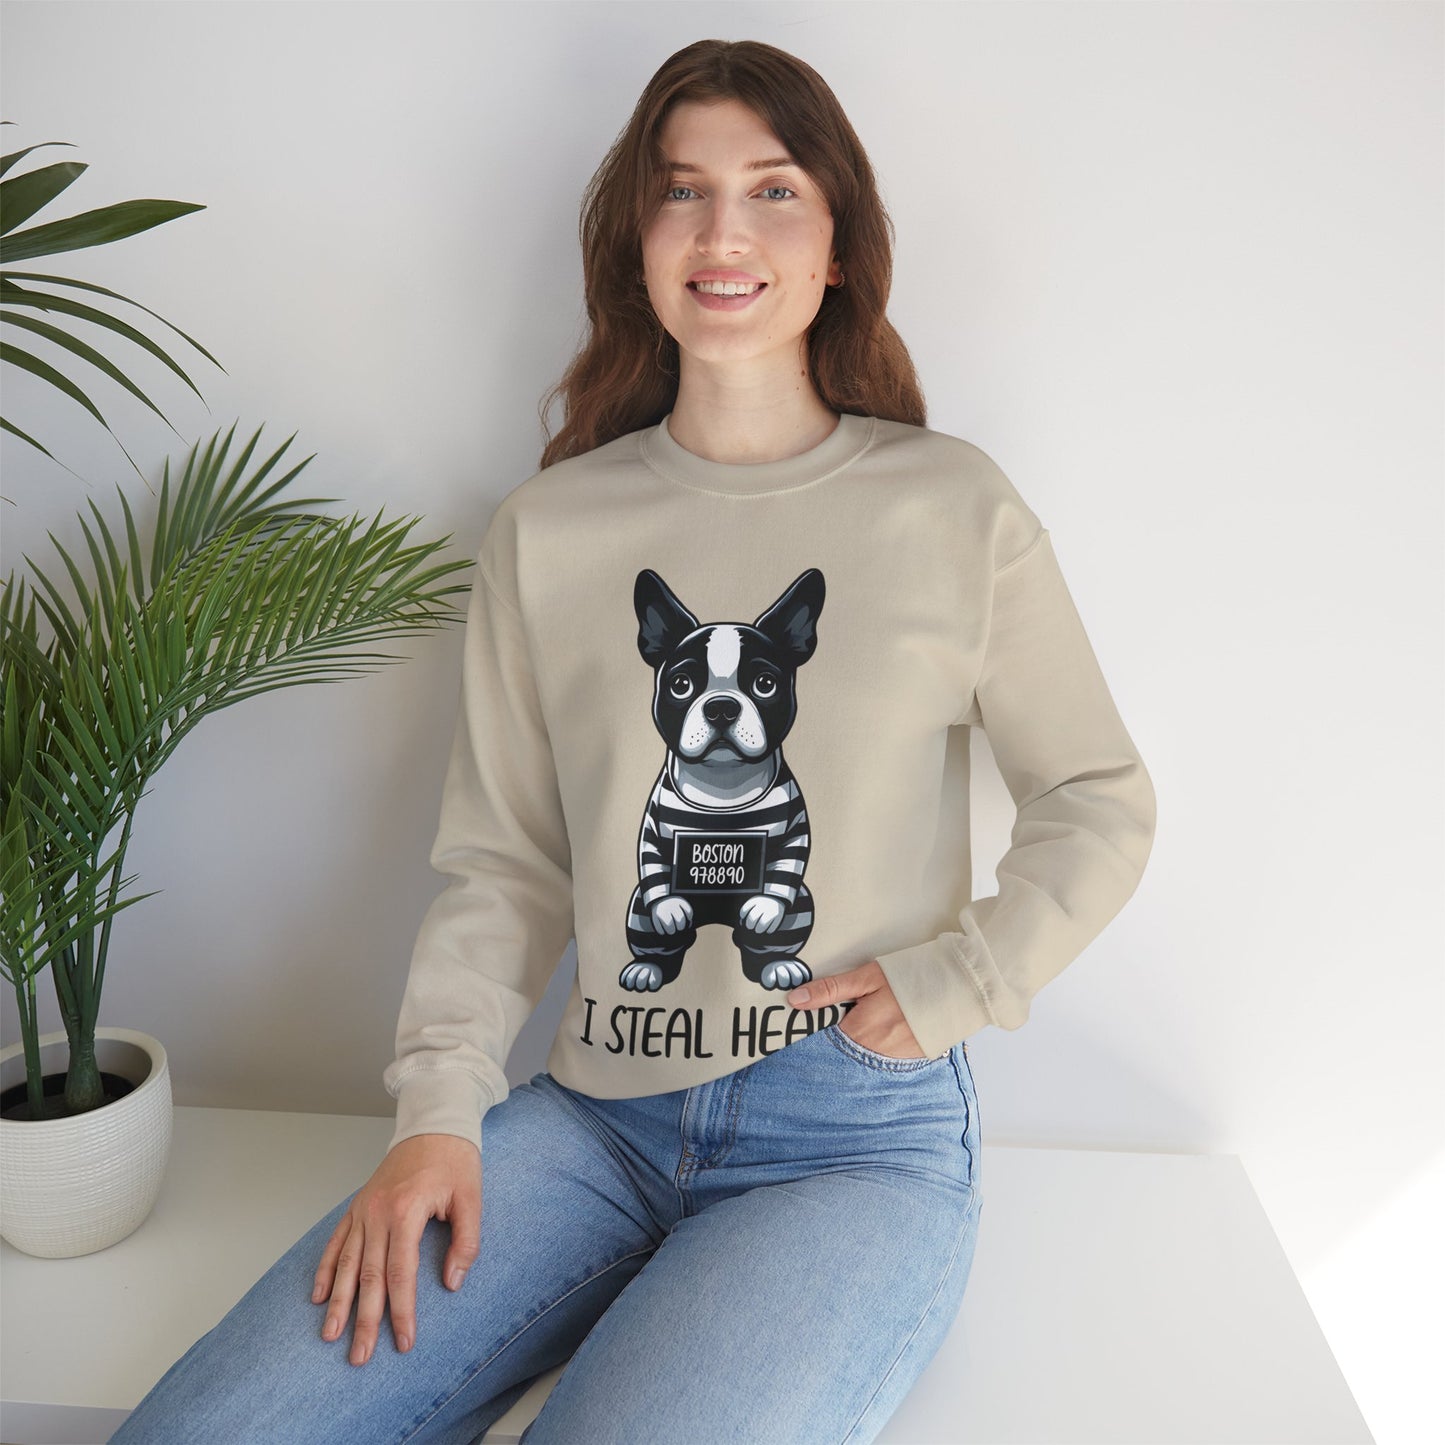 Doc - Unisex Sweatshirt for Boston Terrier lovers